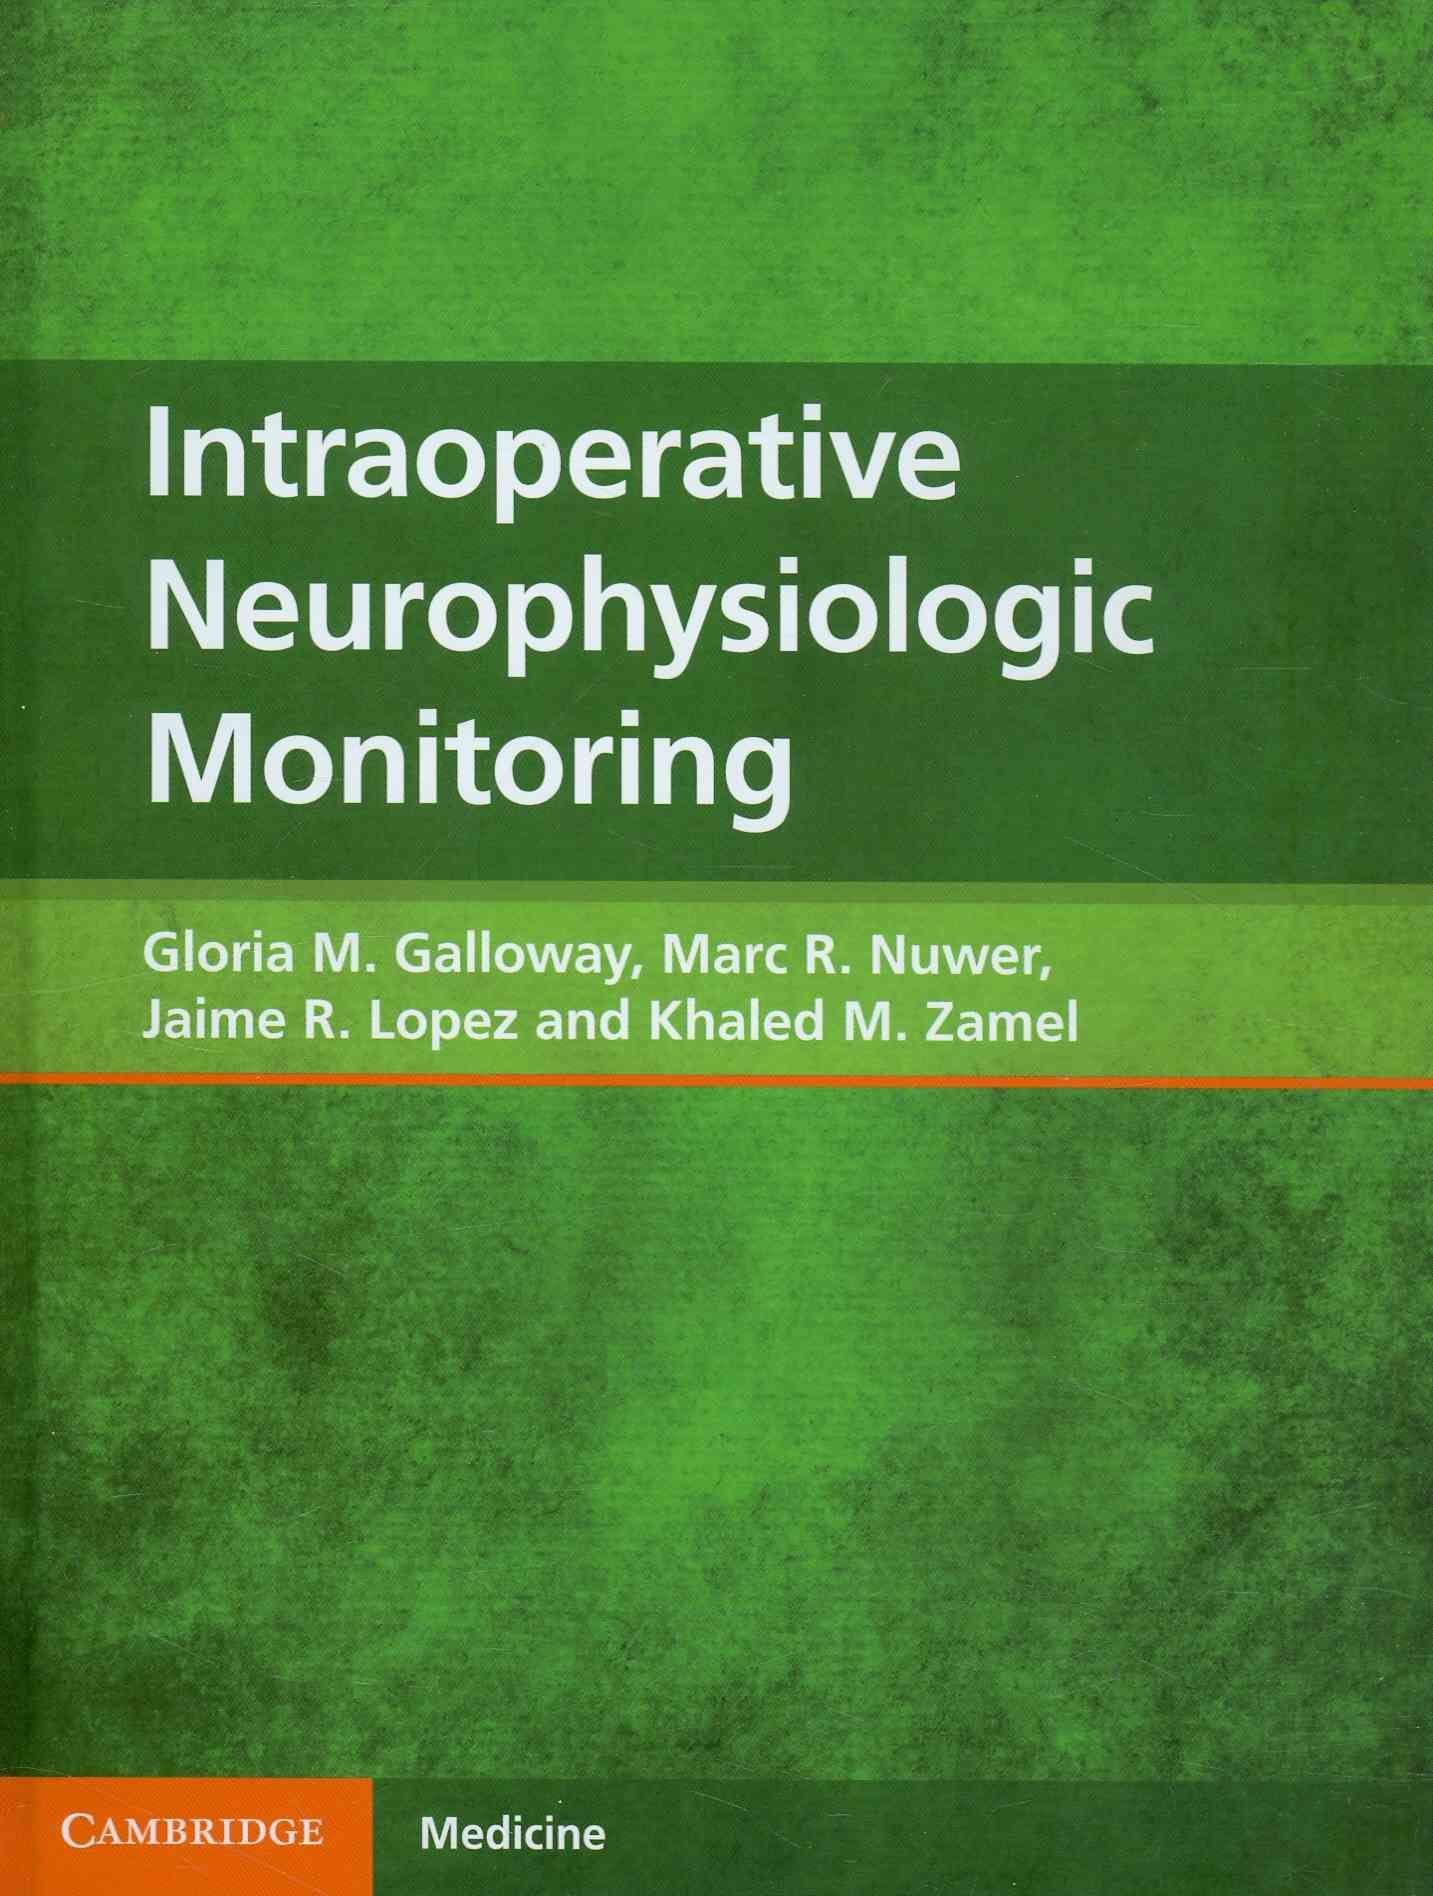 Intraoperative Neurophysiologic Monitoring